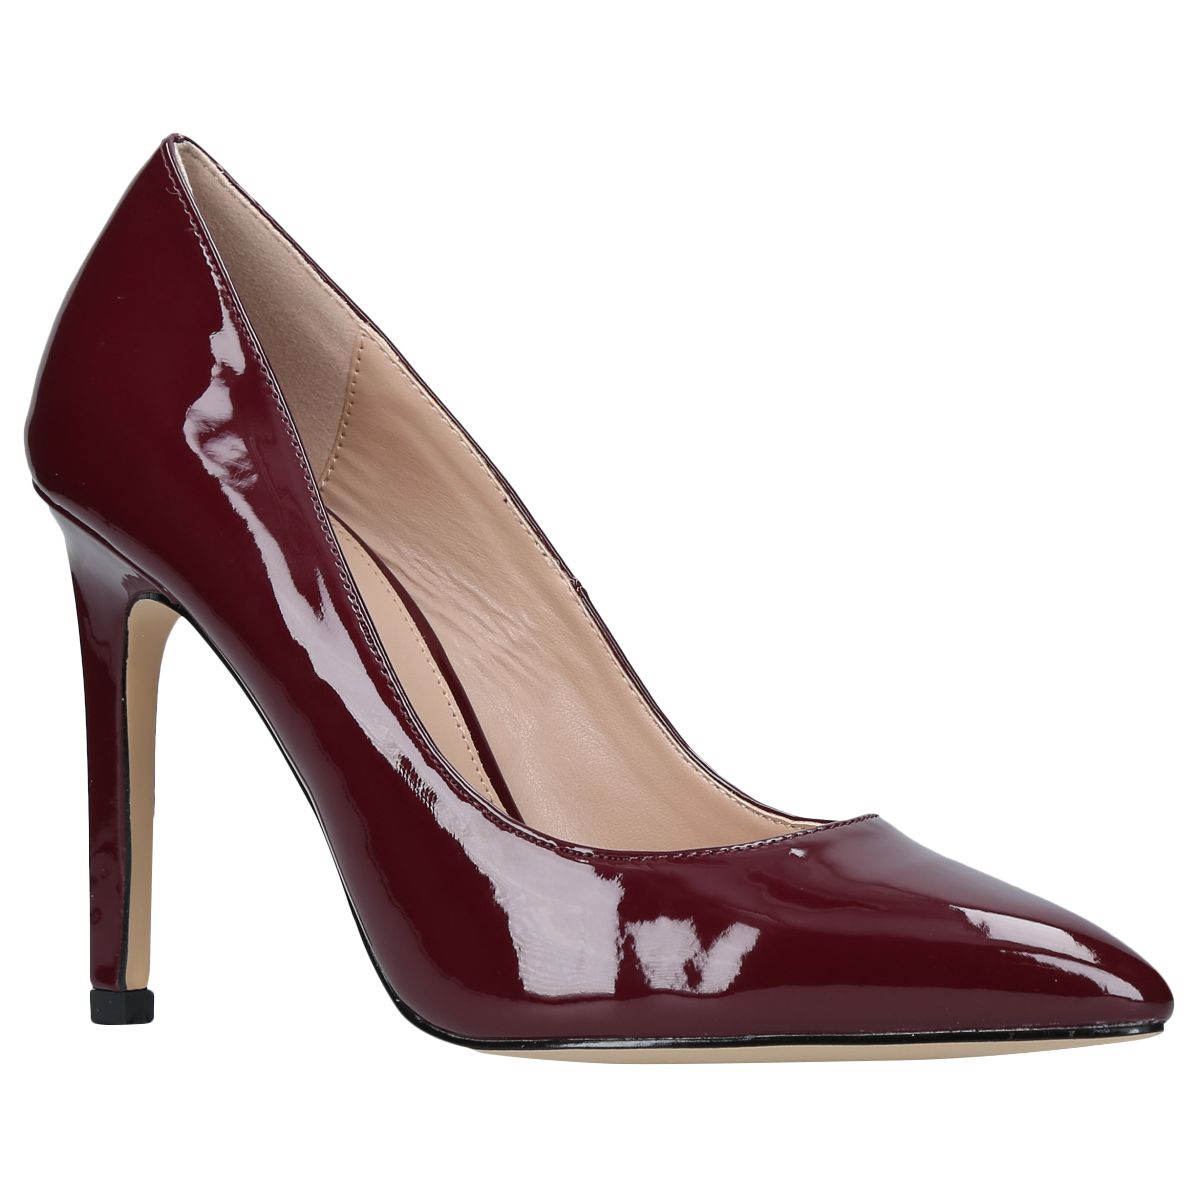 Carvela Kestral Stiletto Heeled Court Shoes, Red Wine